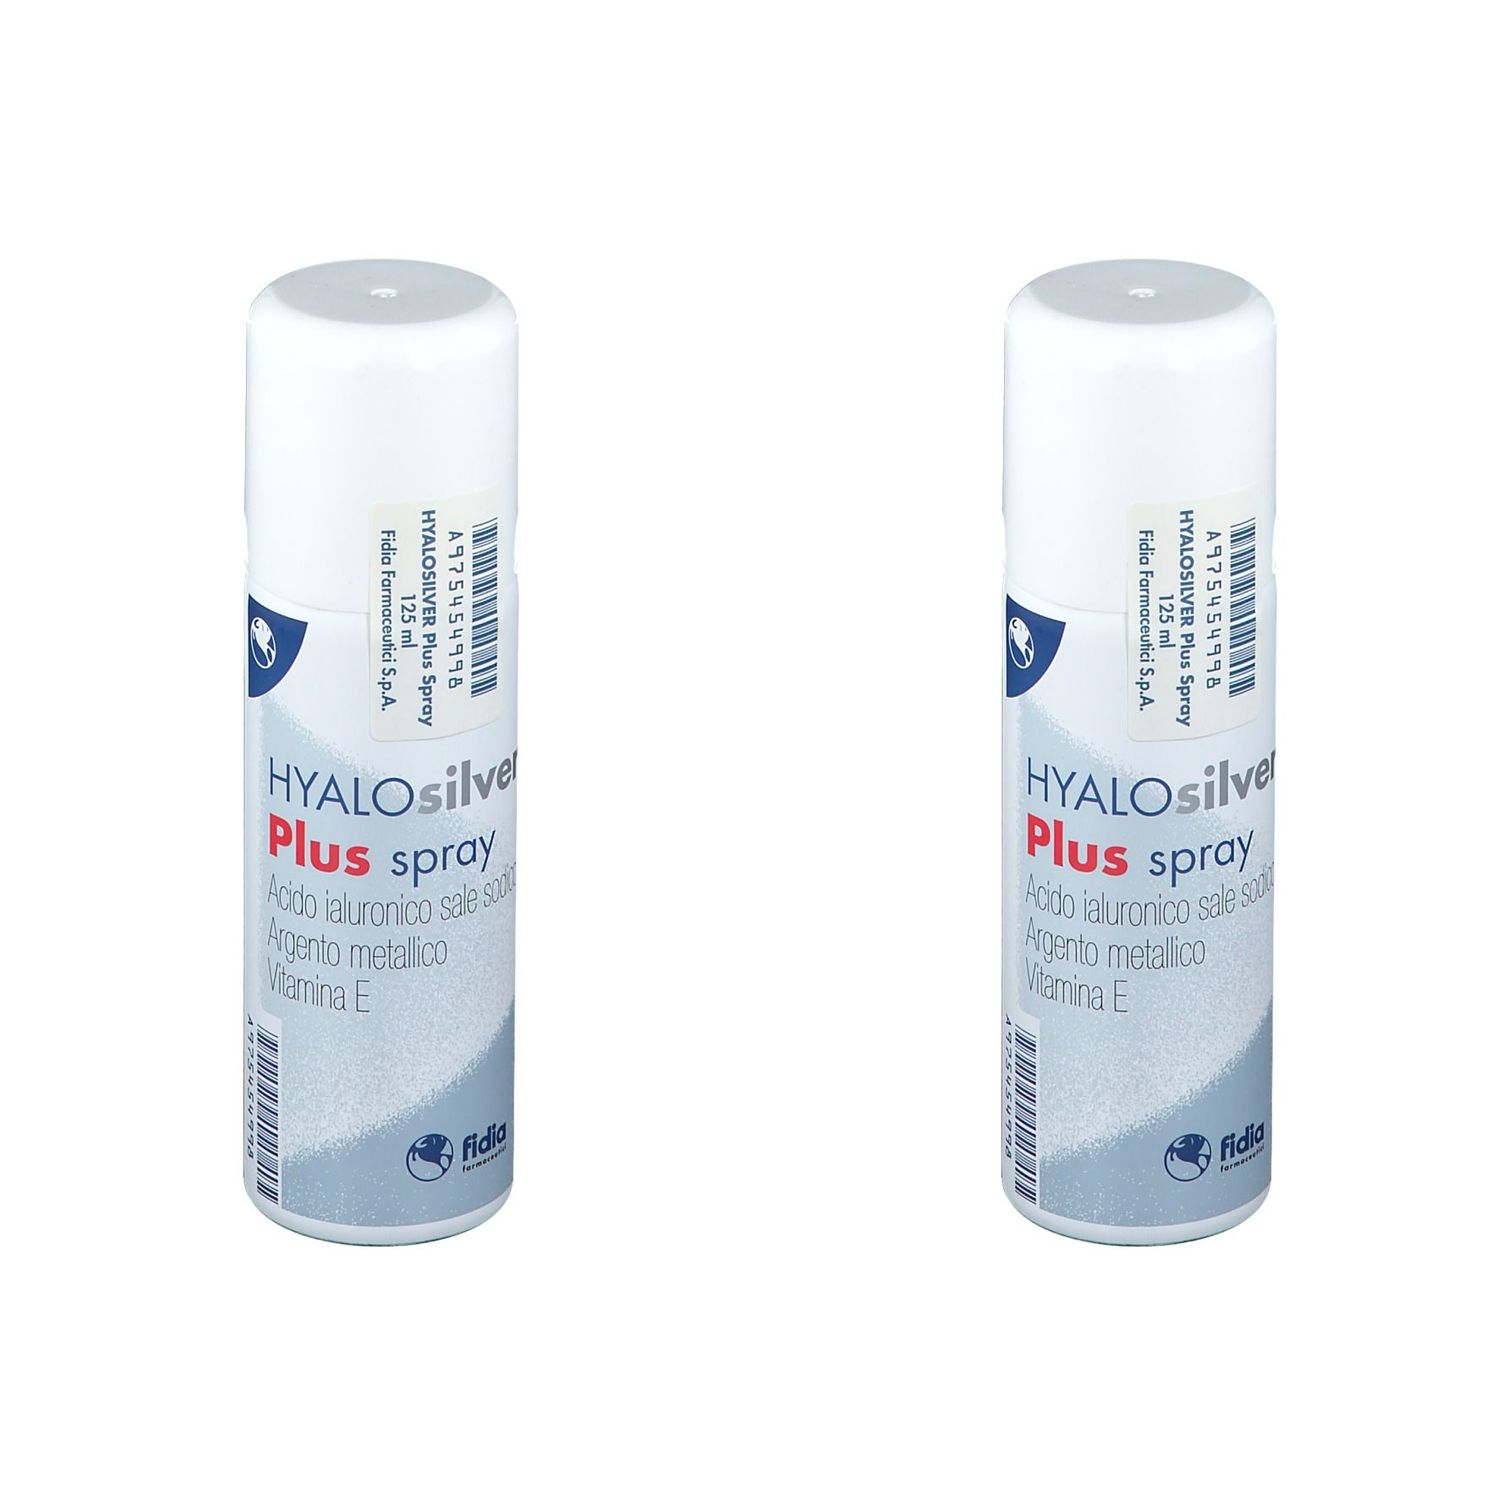 Hyalosilver Plus Spray 125Ml: acquista online in offerta Hyalosilver